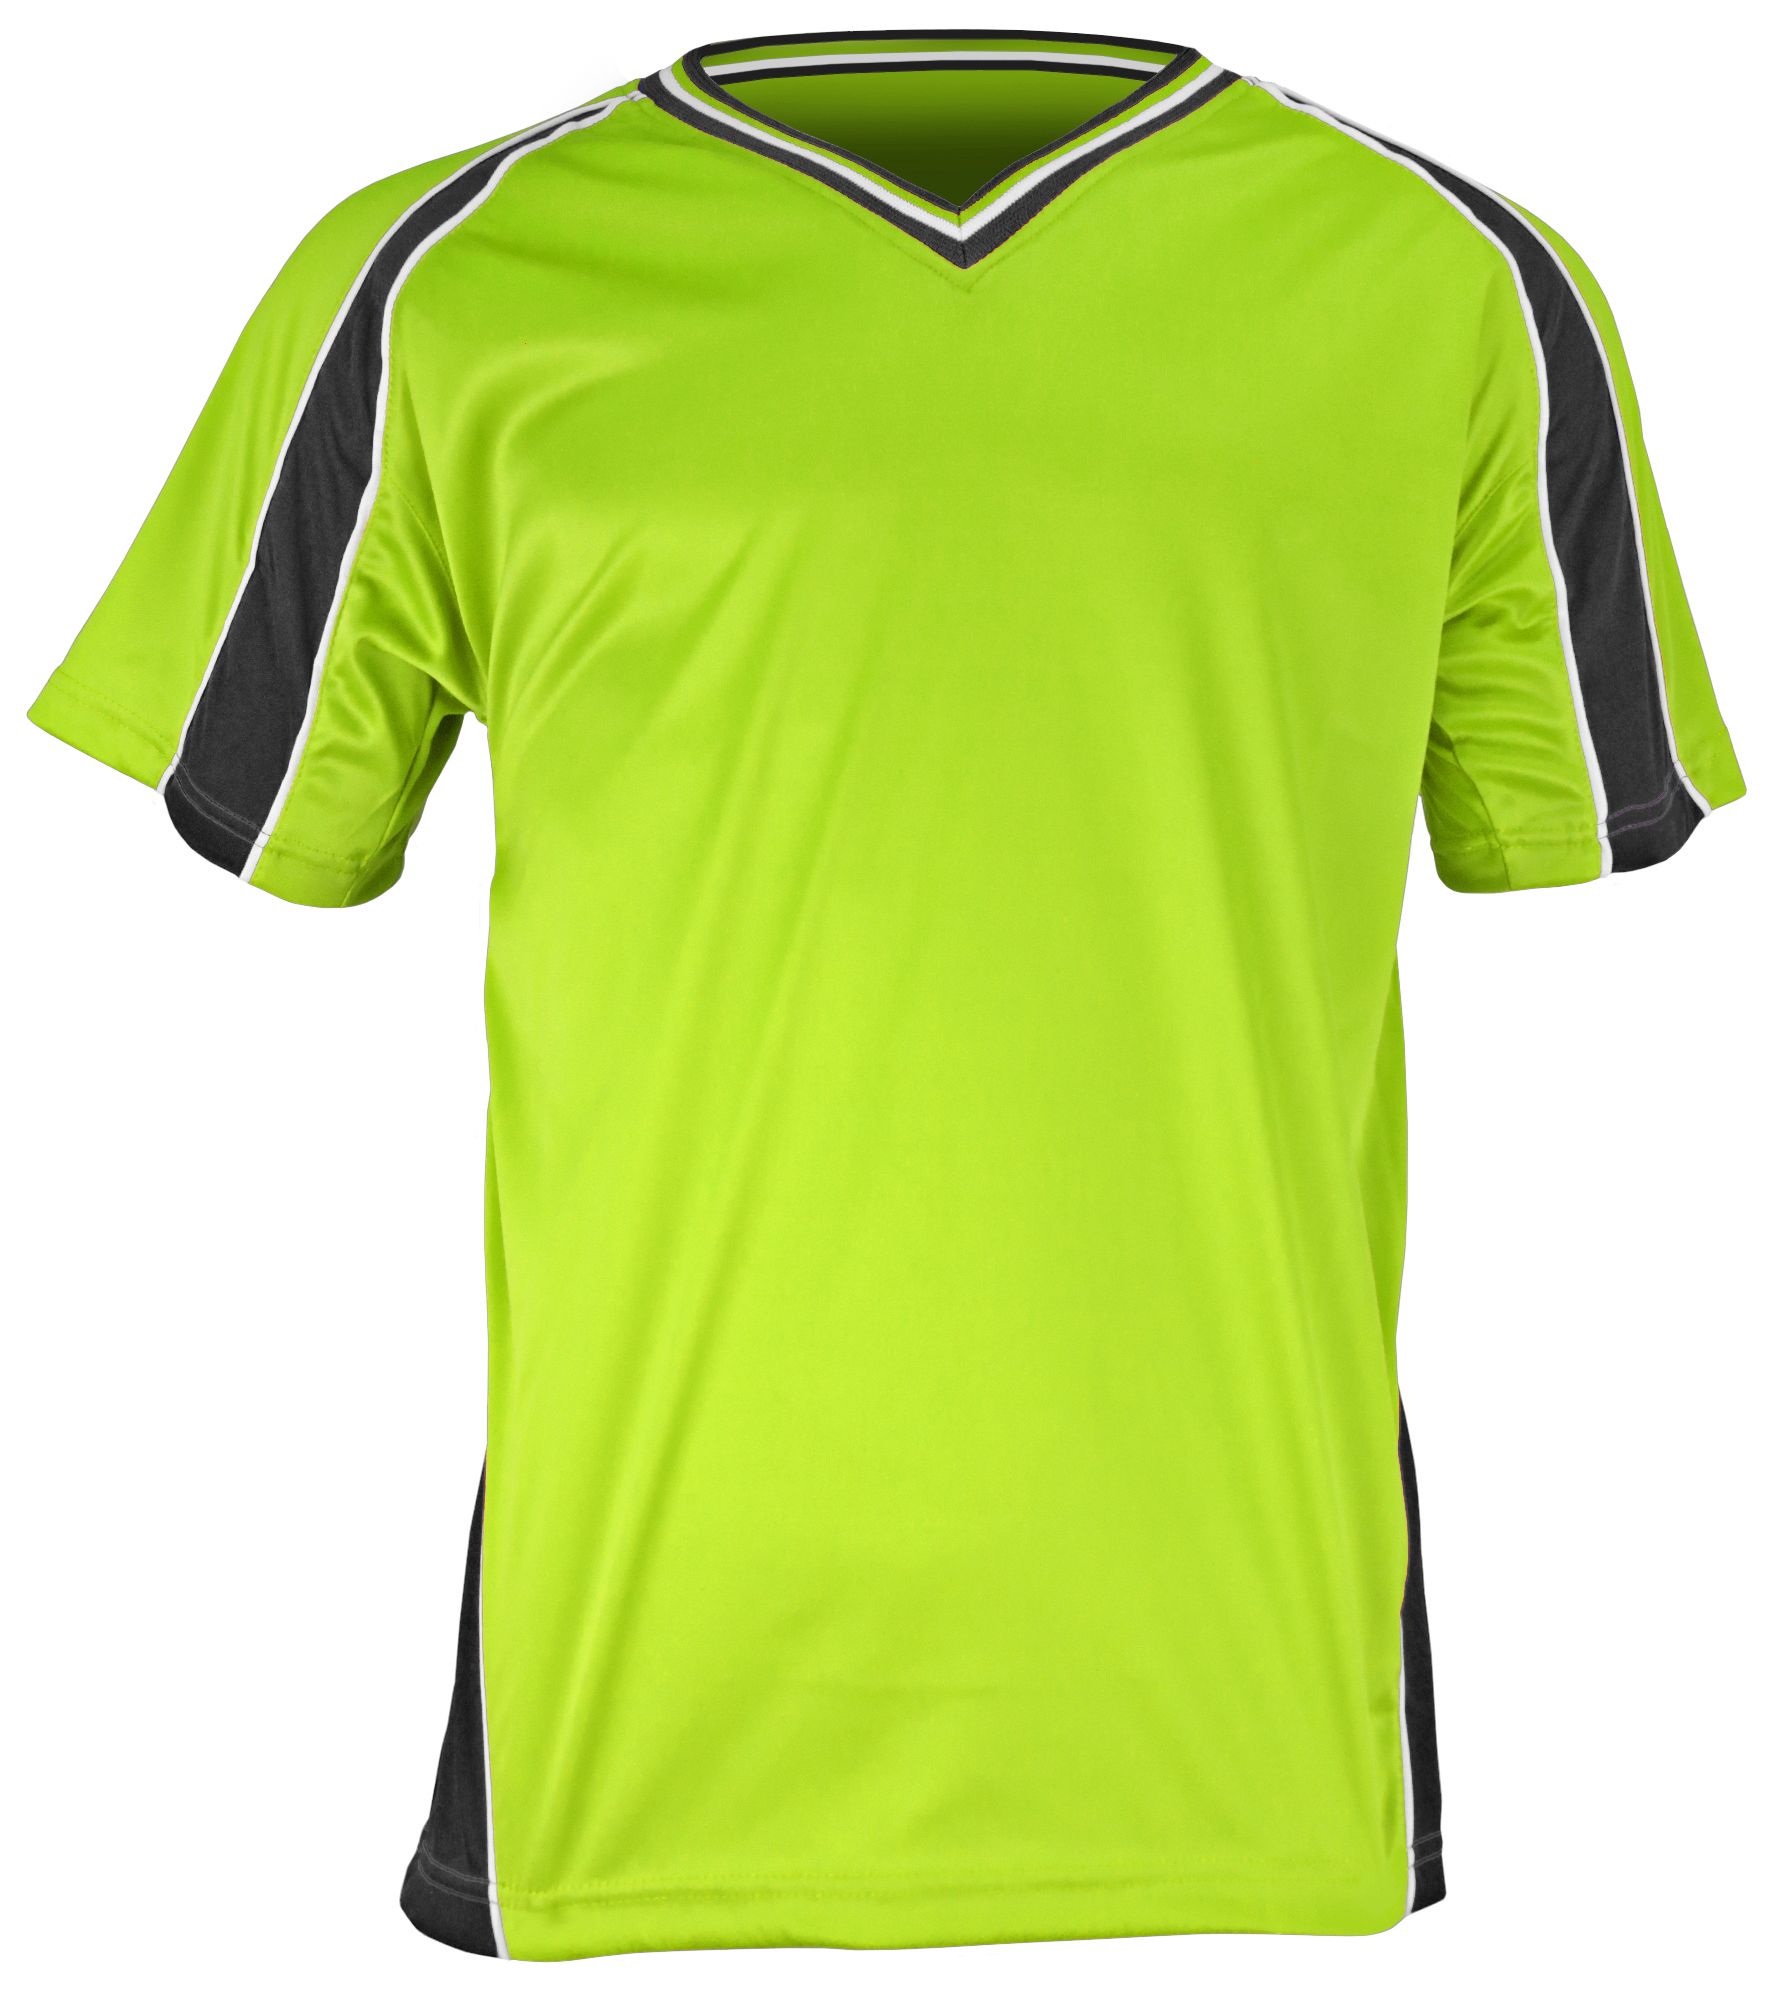 E133321 Adult & Youth Unisex Wick Dry Soccer Jerseys